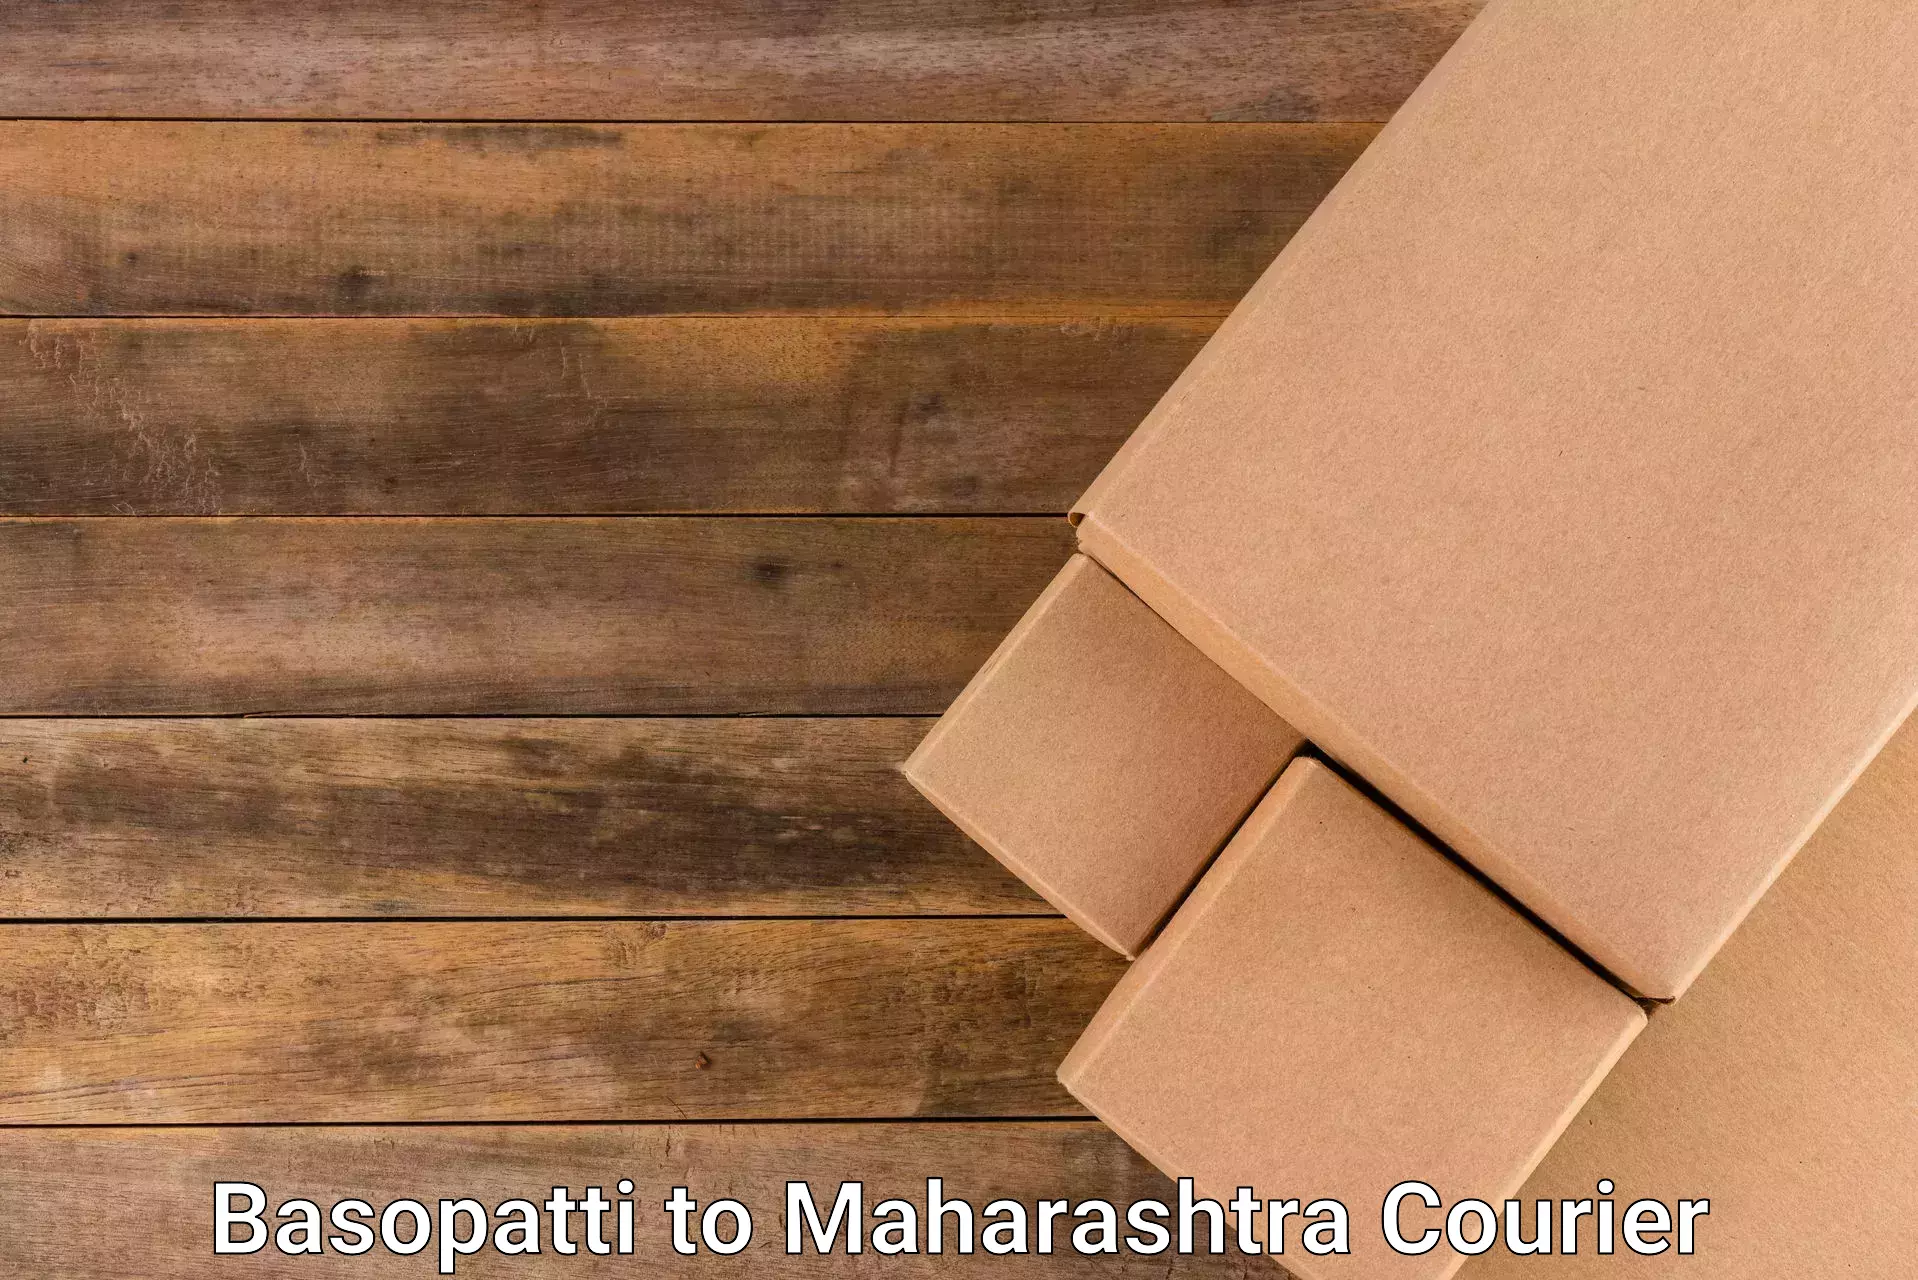 Full-service courier options Basopatti to Shirpur